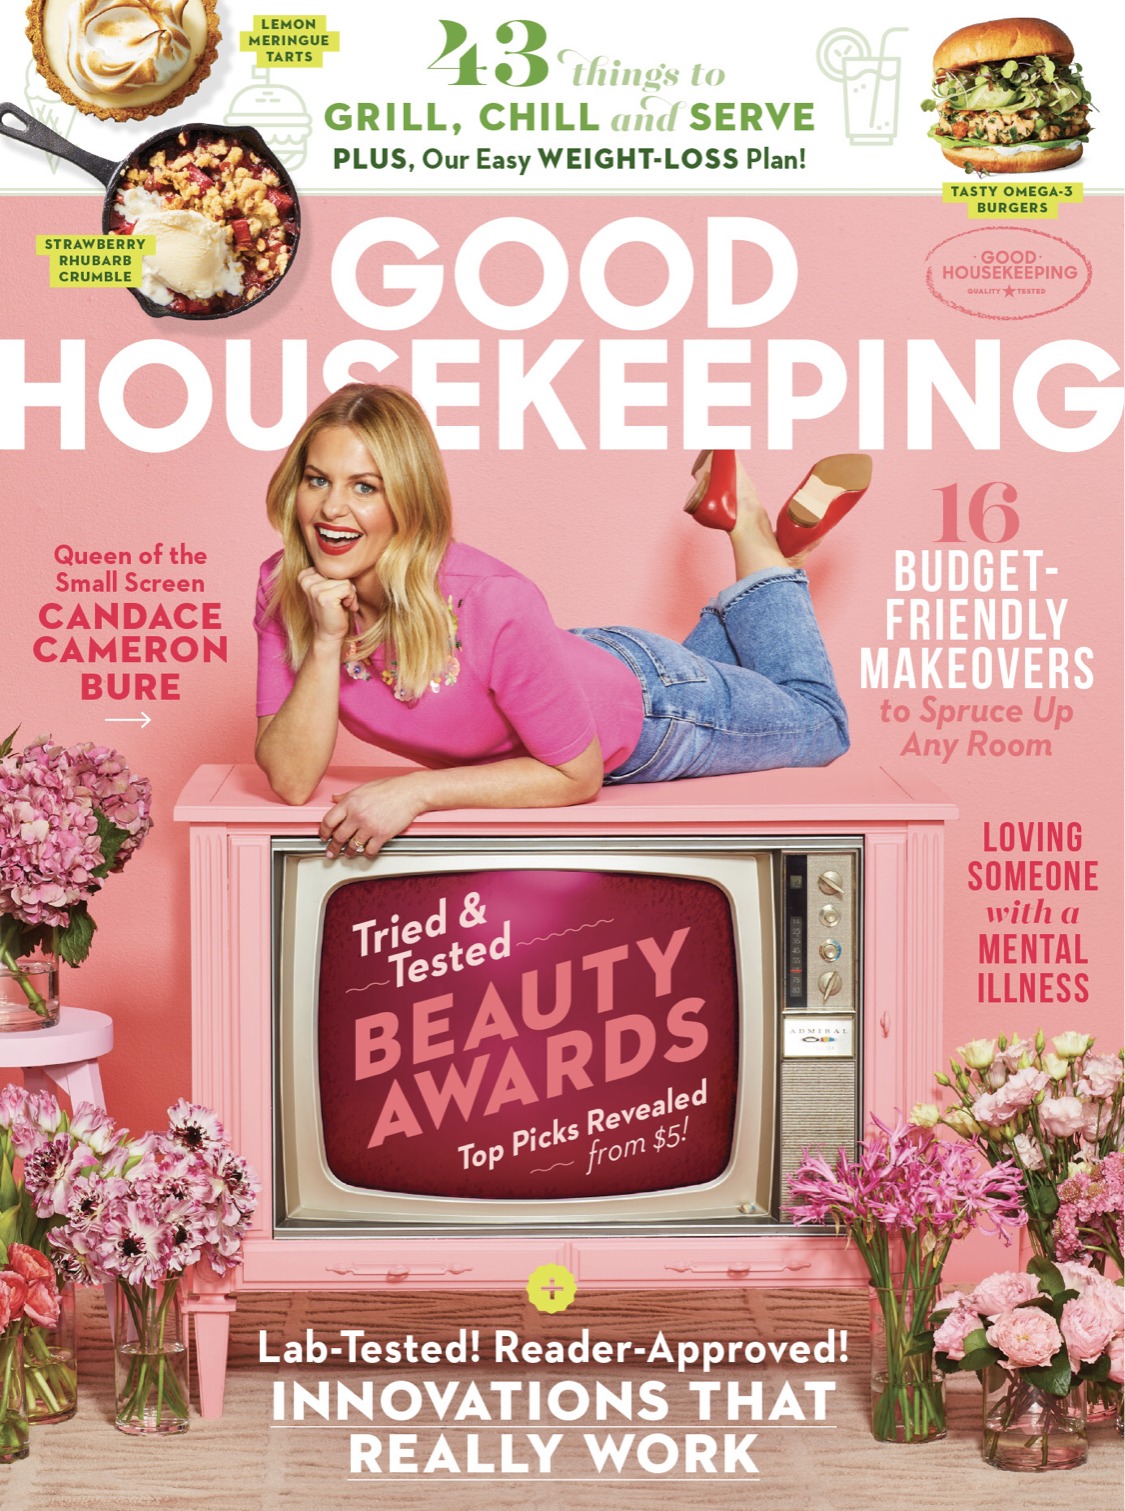 Good Housekeeping Magazine Featured The Lakehouse! Dans le Lakehouse